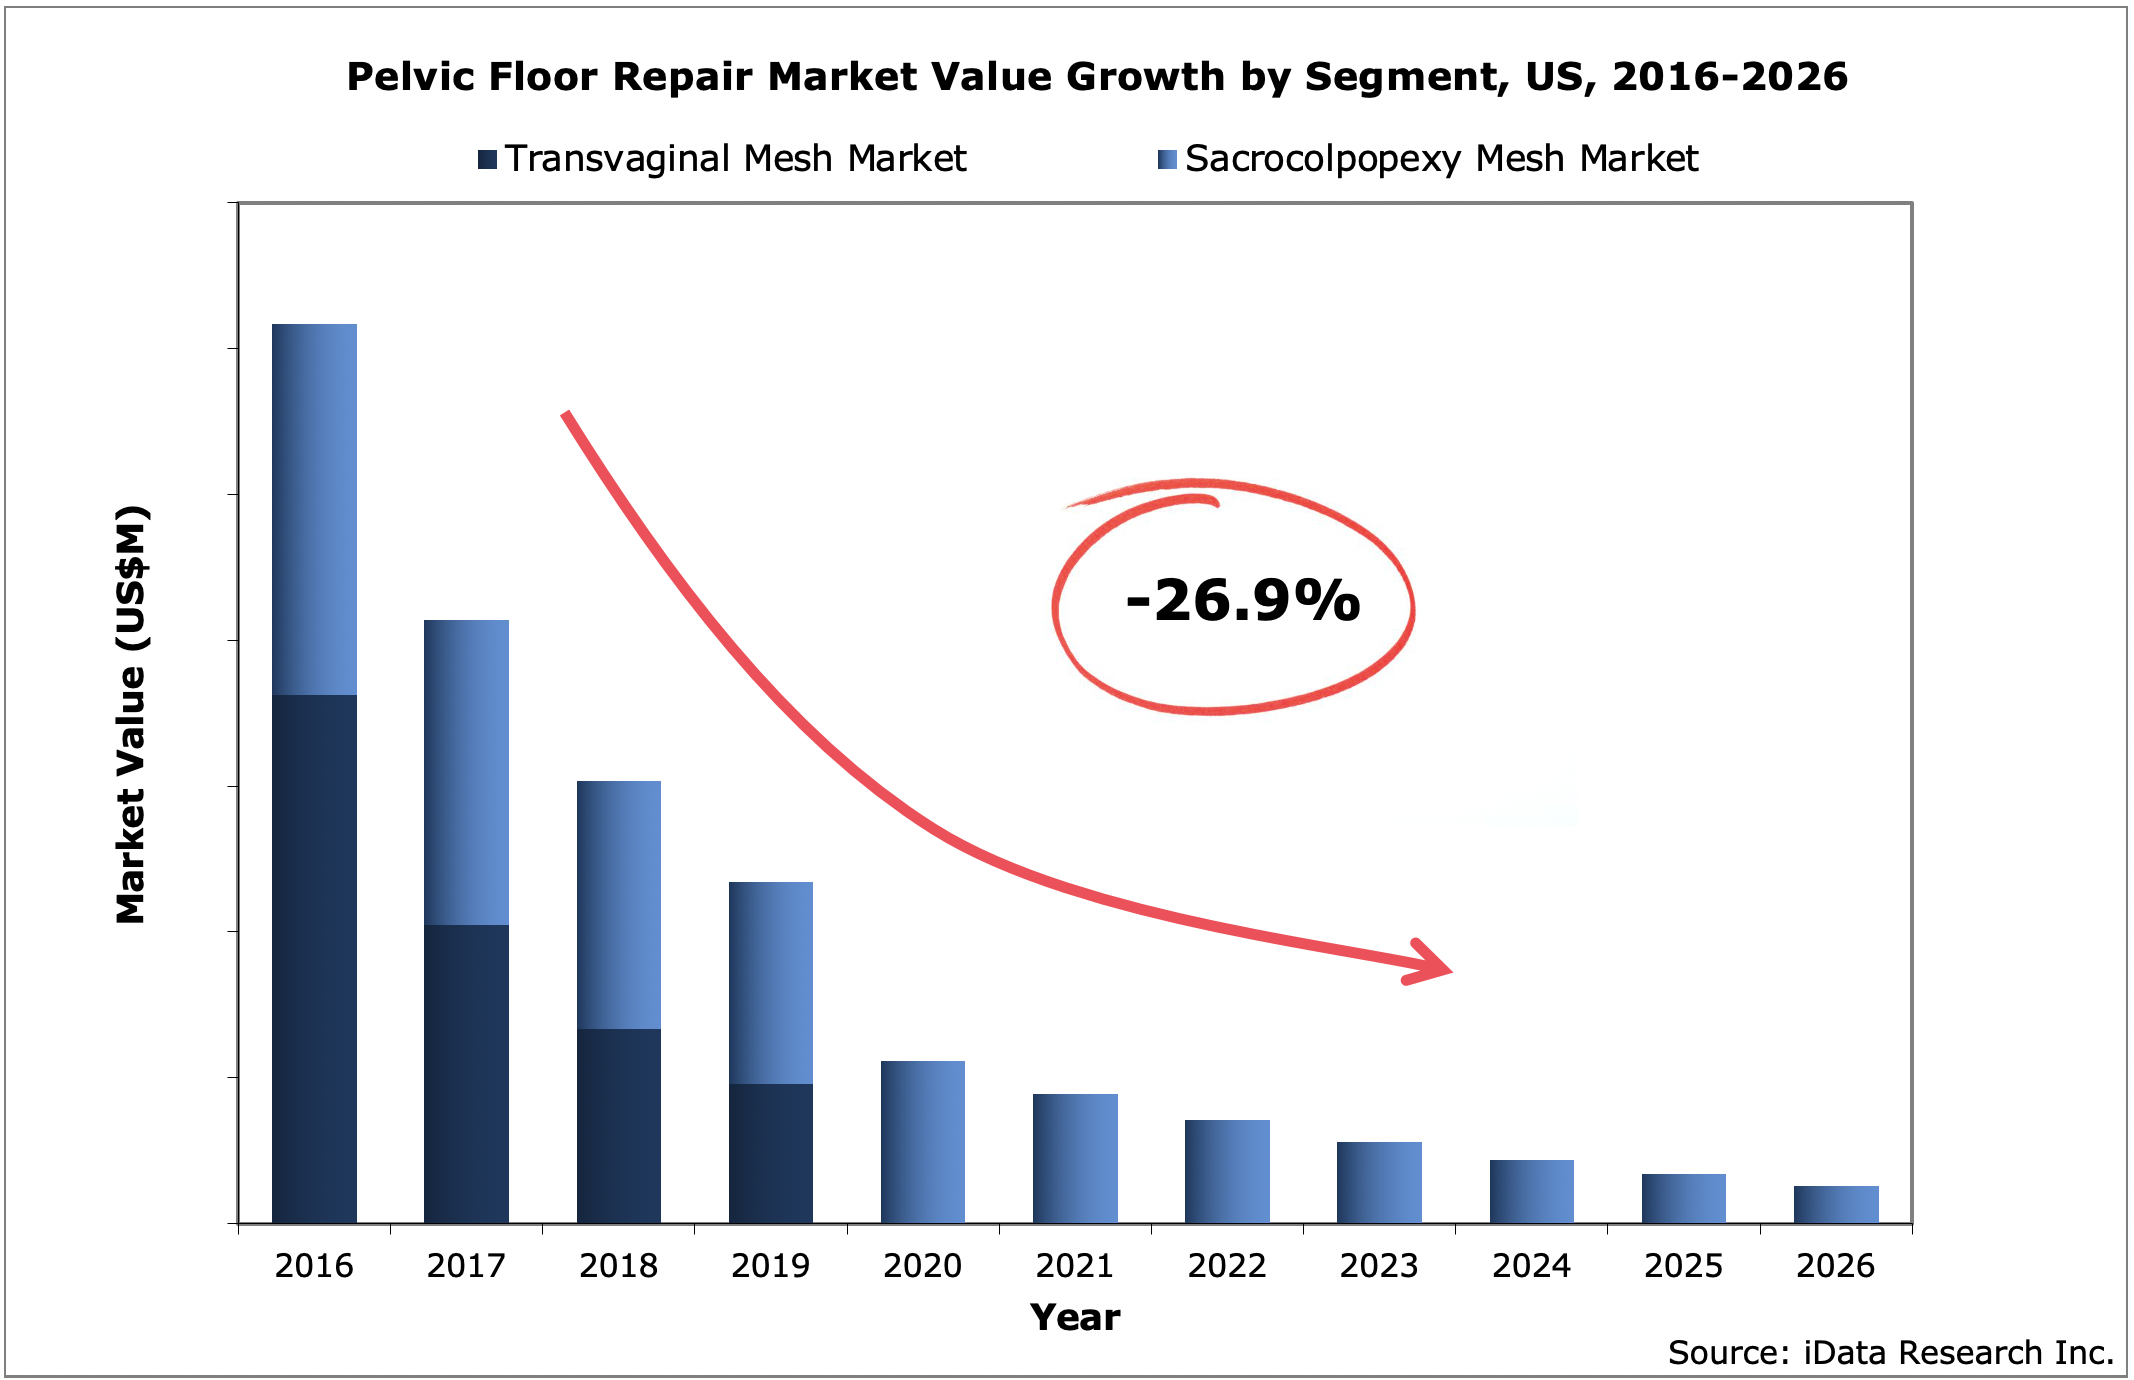 US Pelvic Floor Repair Market Value by Segment, 2016-2026